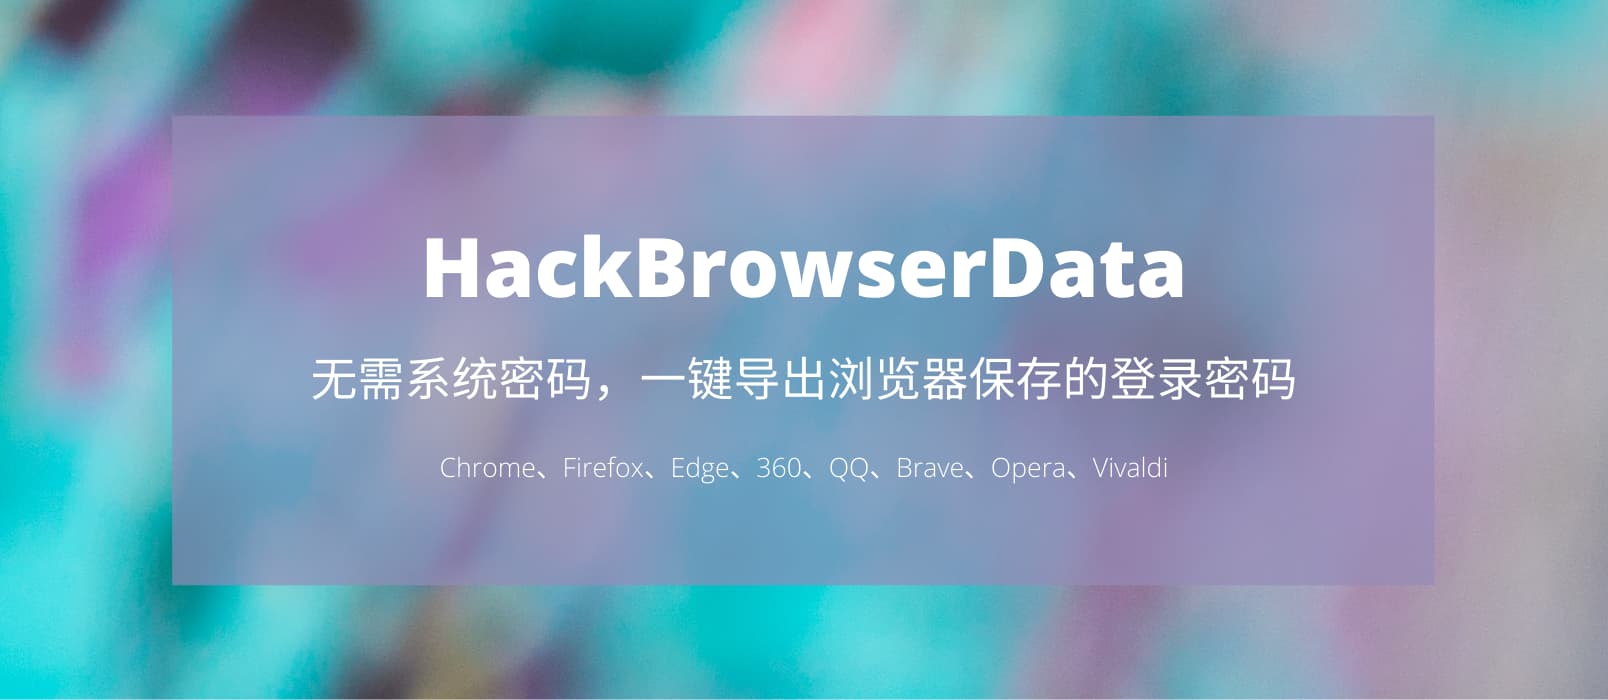 HackBrowserData - 无需密码，一键导出 Chrome、Firefox、Edge、360、QQ、Brave 浏览器保存的登录密码、历史记录、Cookies、书签